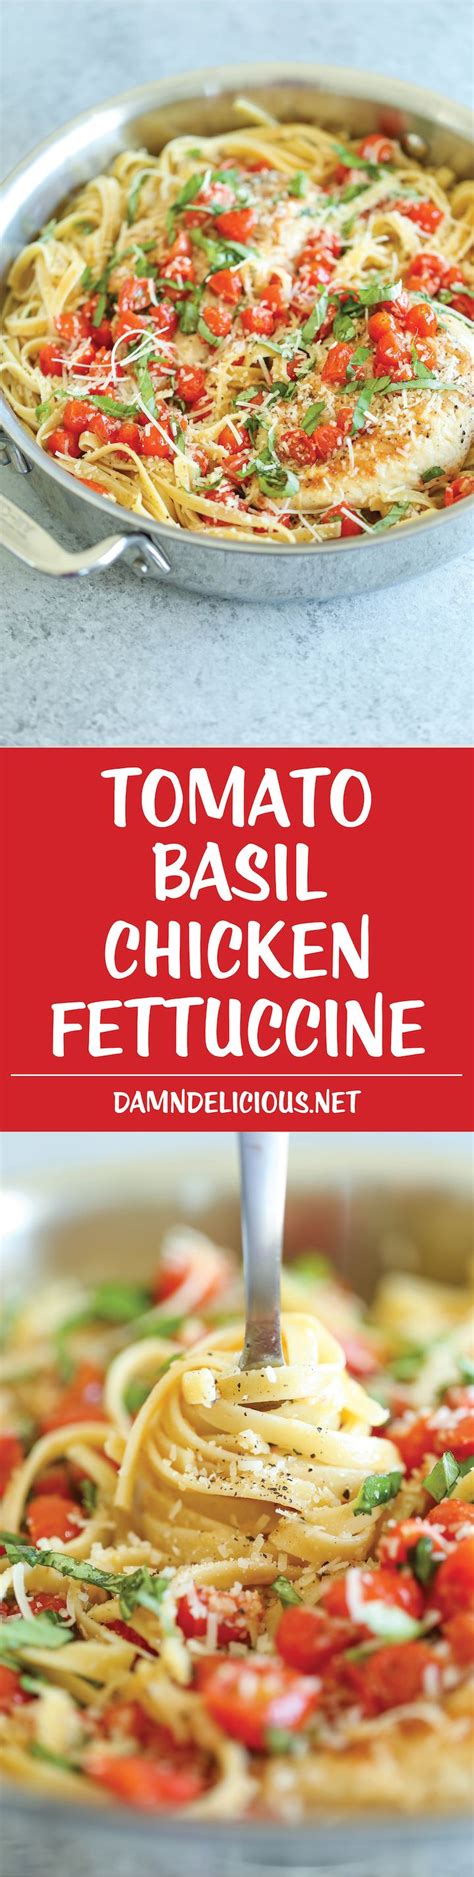 tomato basil chicken fettuccine  quick weeknight italian pasta dish